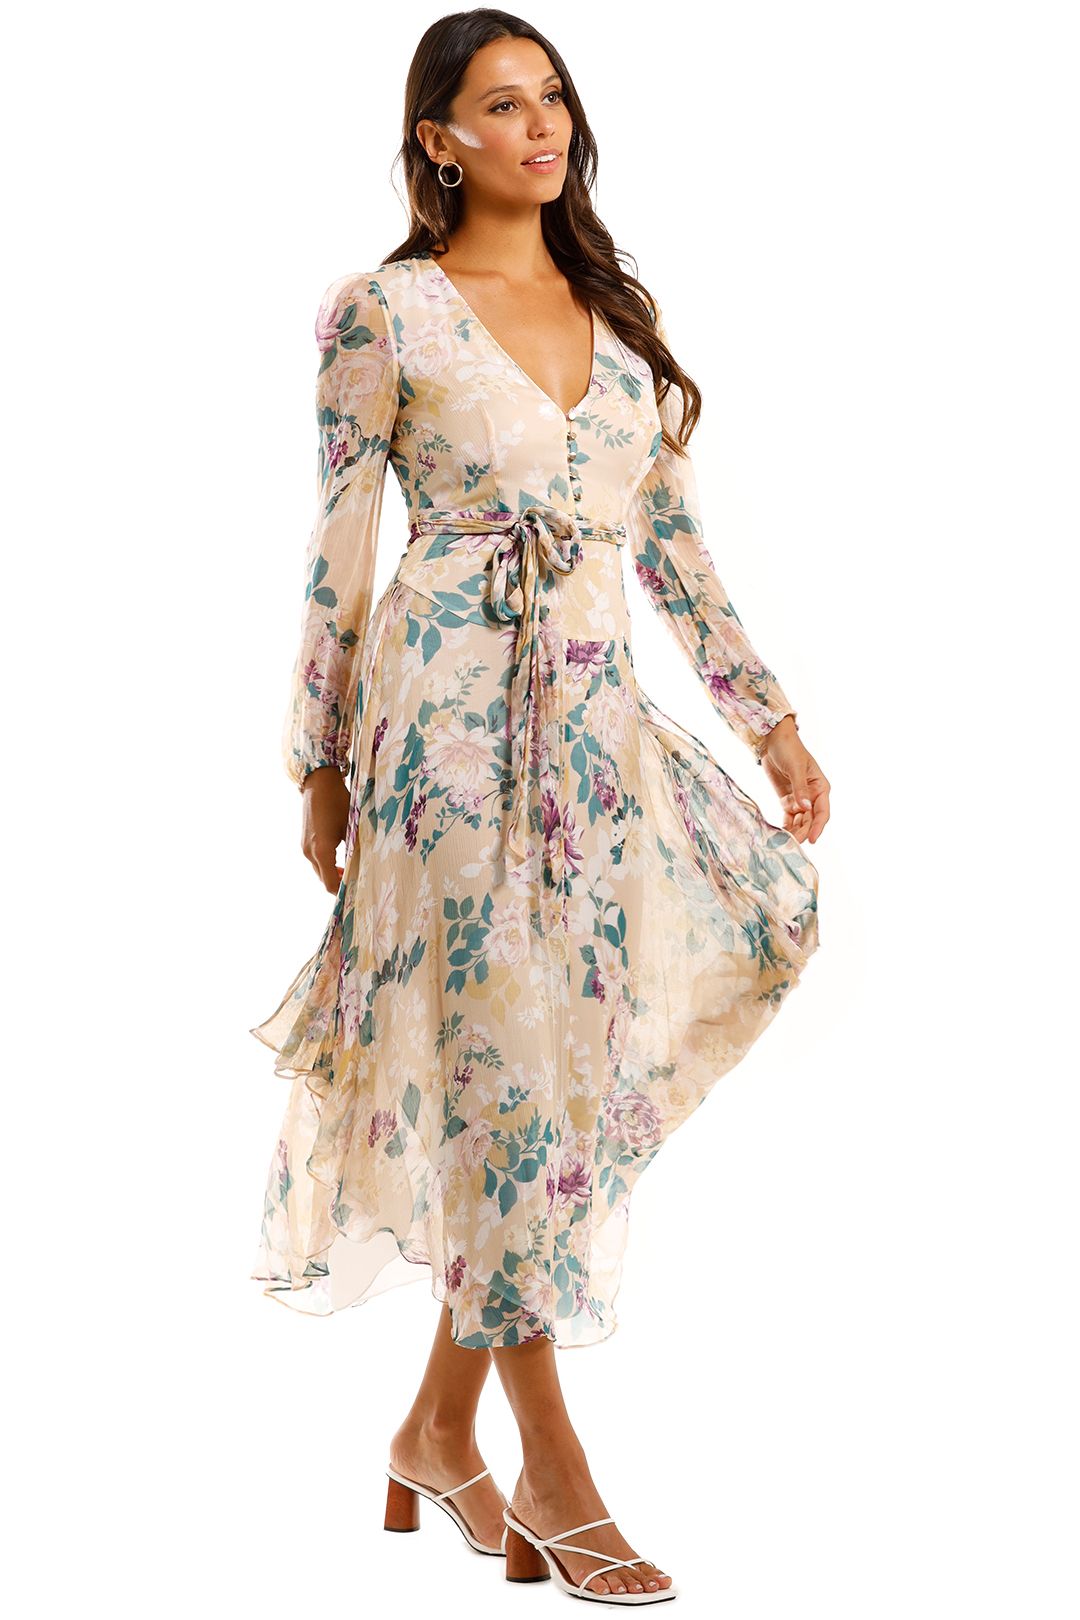 Shona Joy Donatella Long Sleeve Midi Dress Floral